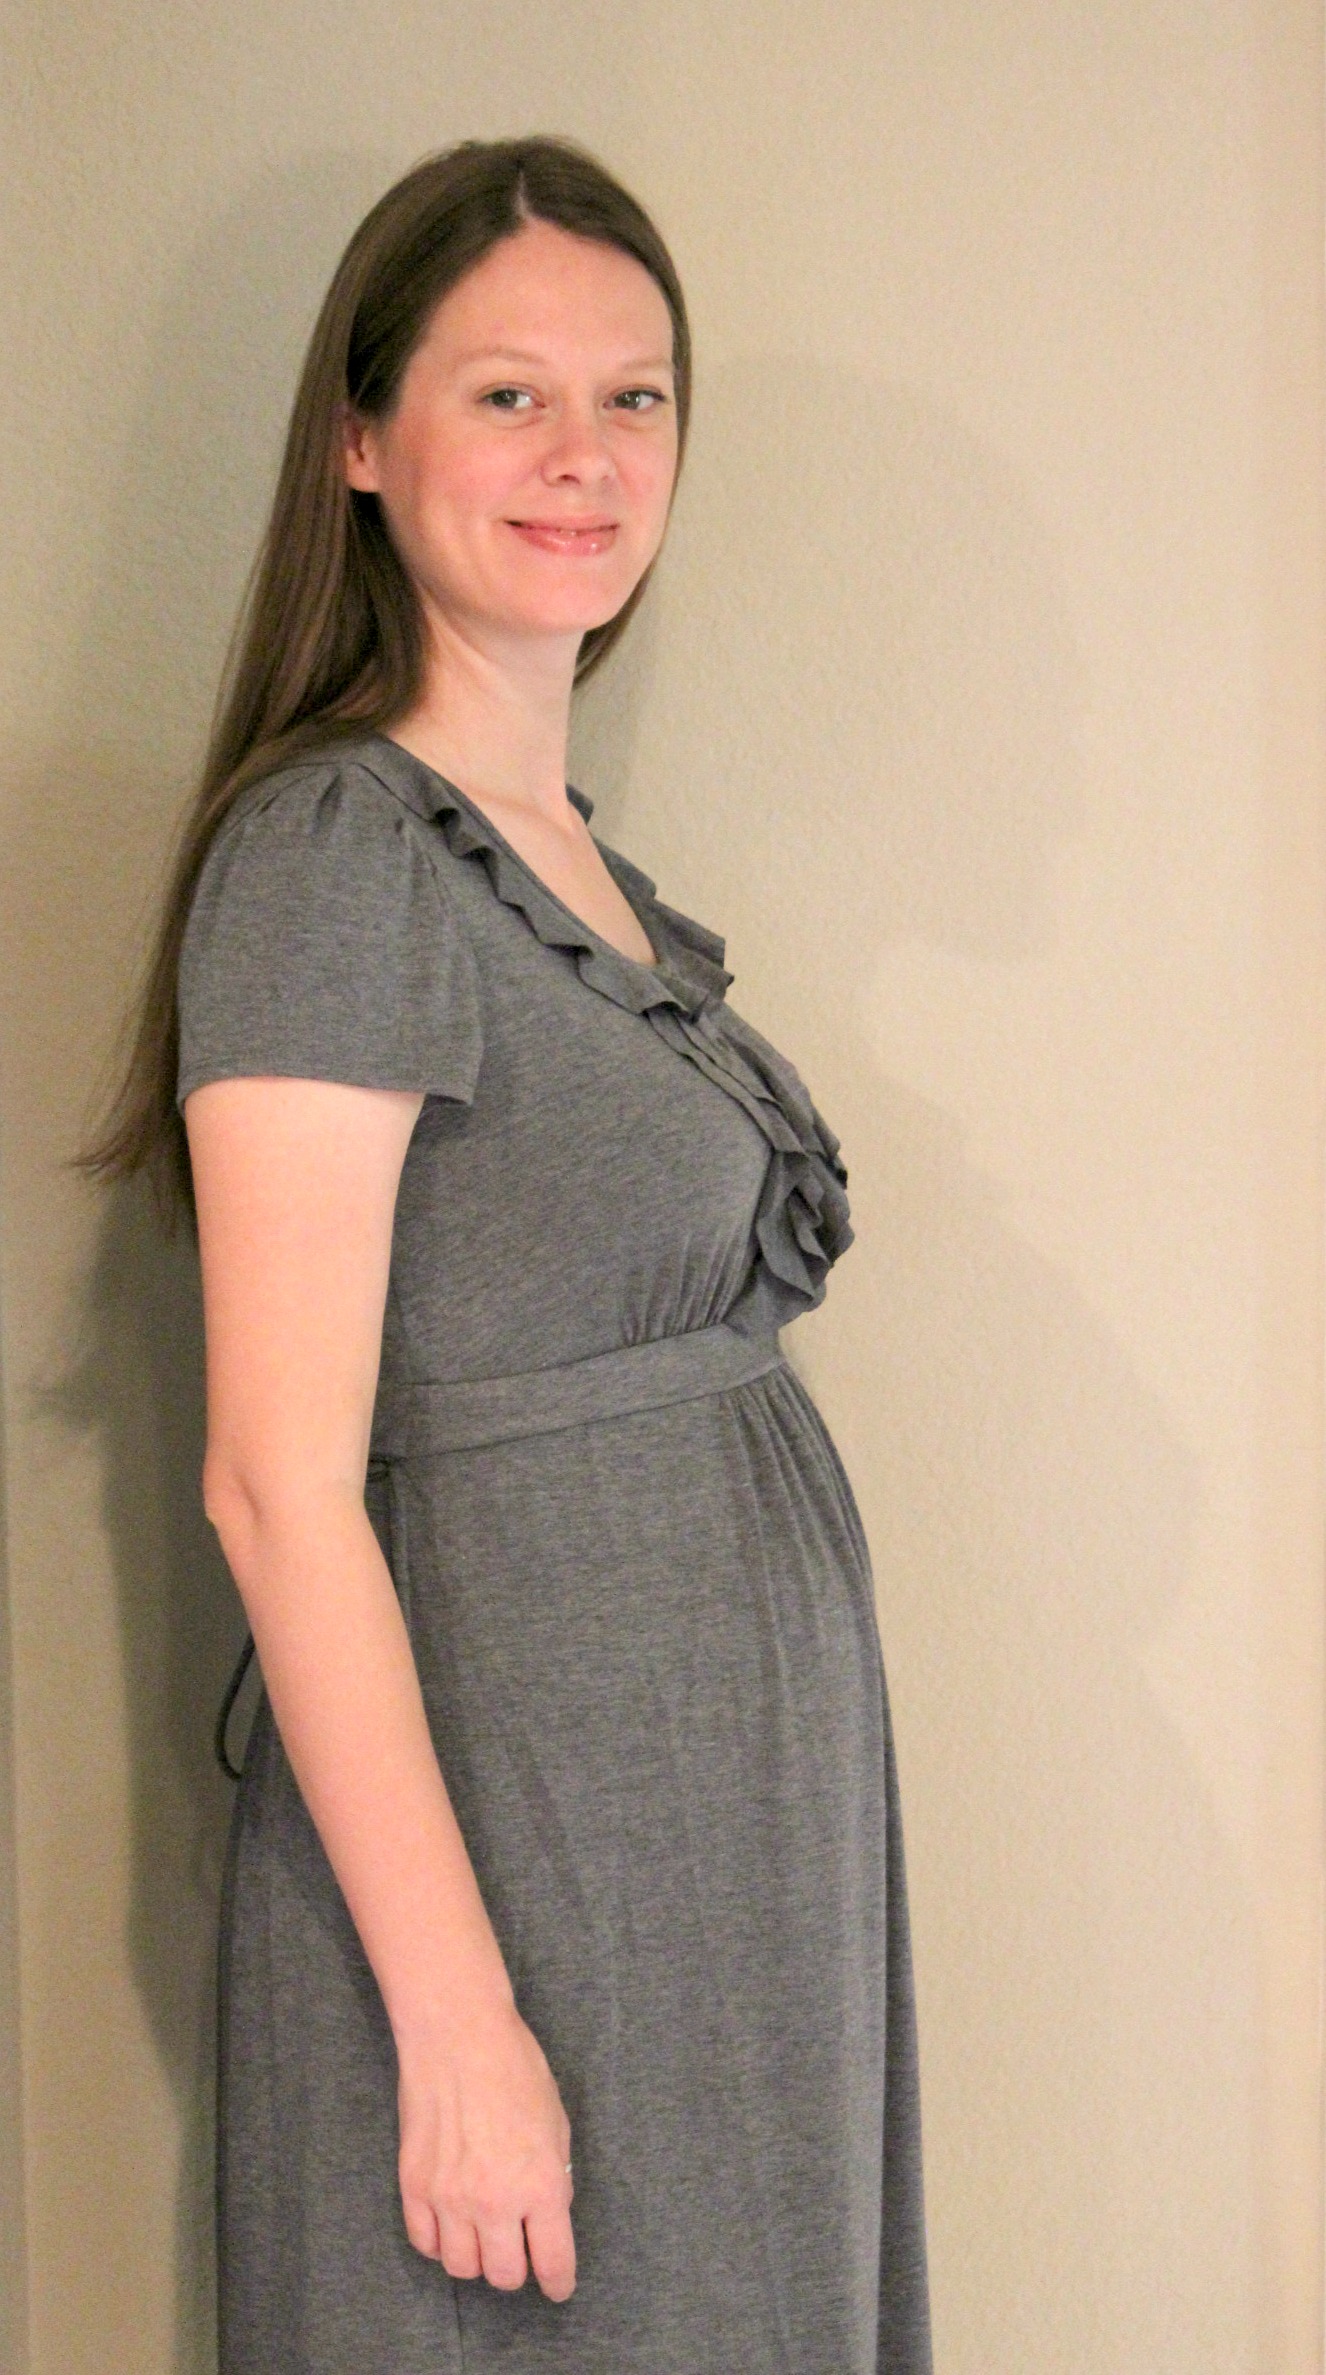 pregnant belly at 17 weeks gestation